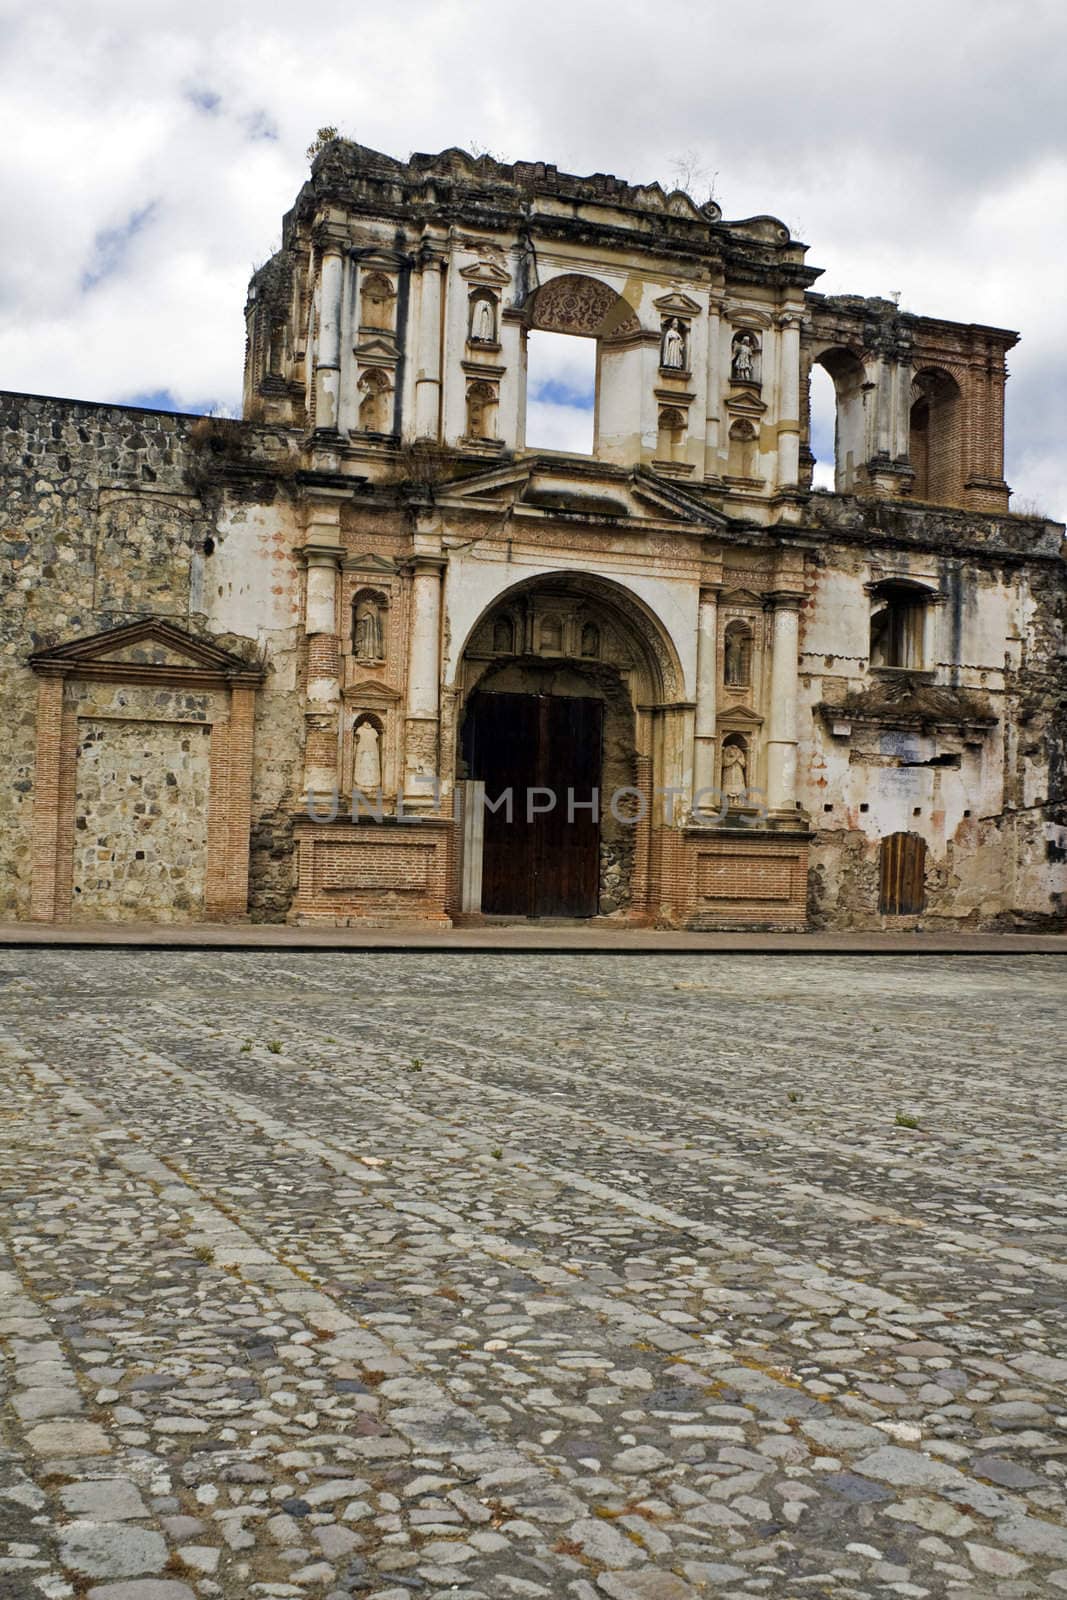 Ruins of the church in Antigua, Guatemala.